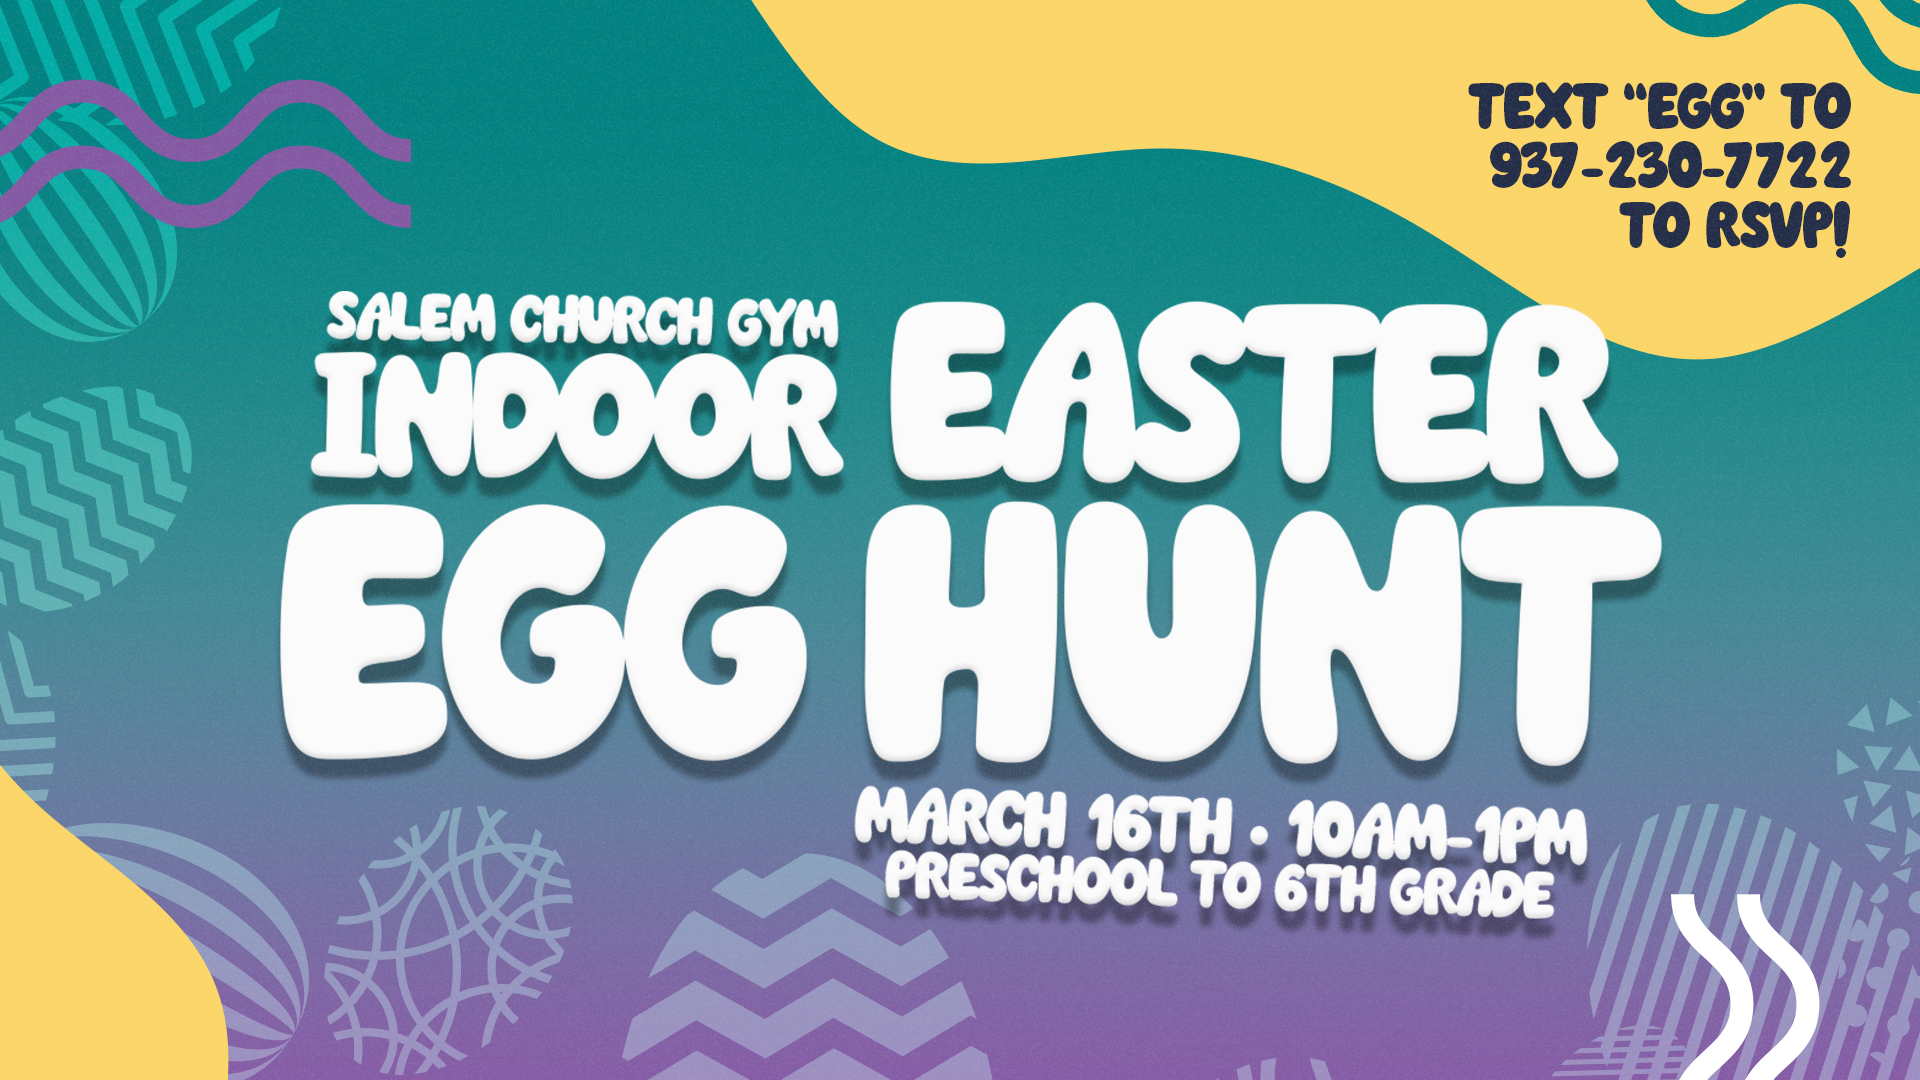 Featured image for “Indoor Easter Egg Hunt!”